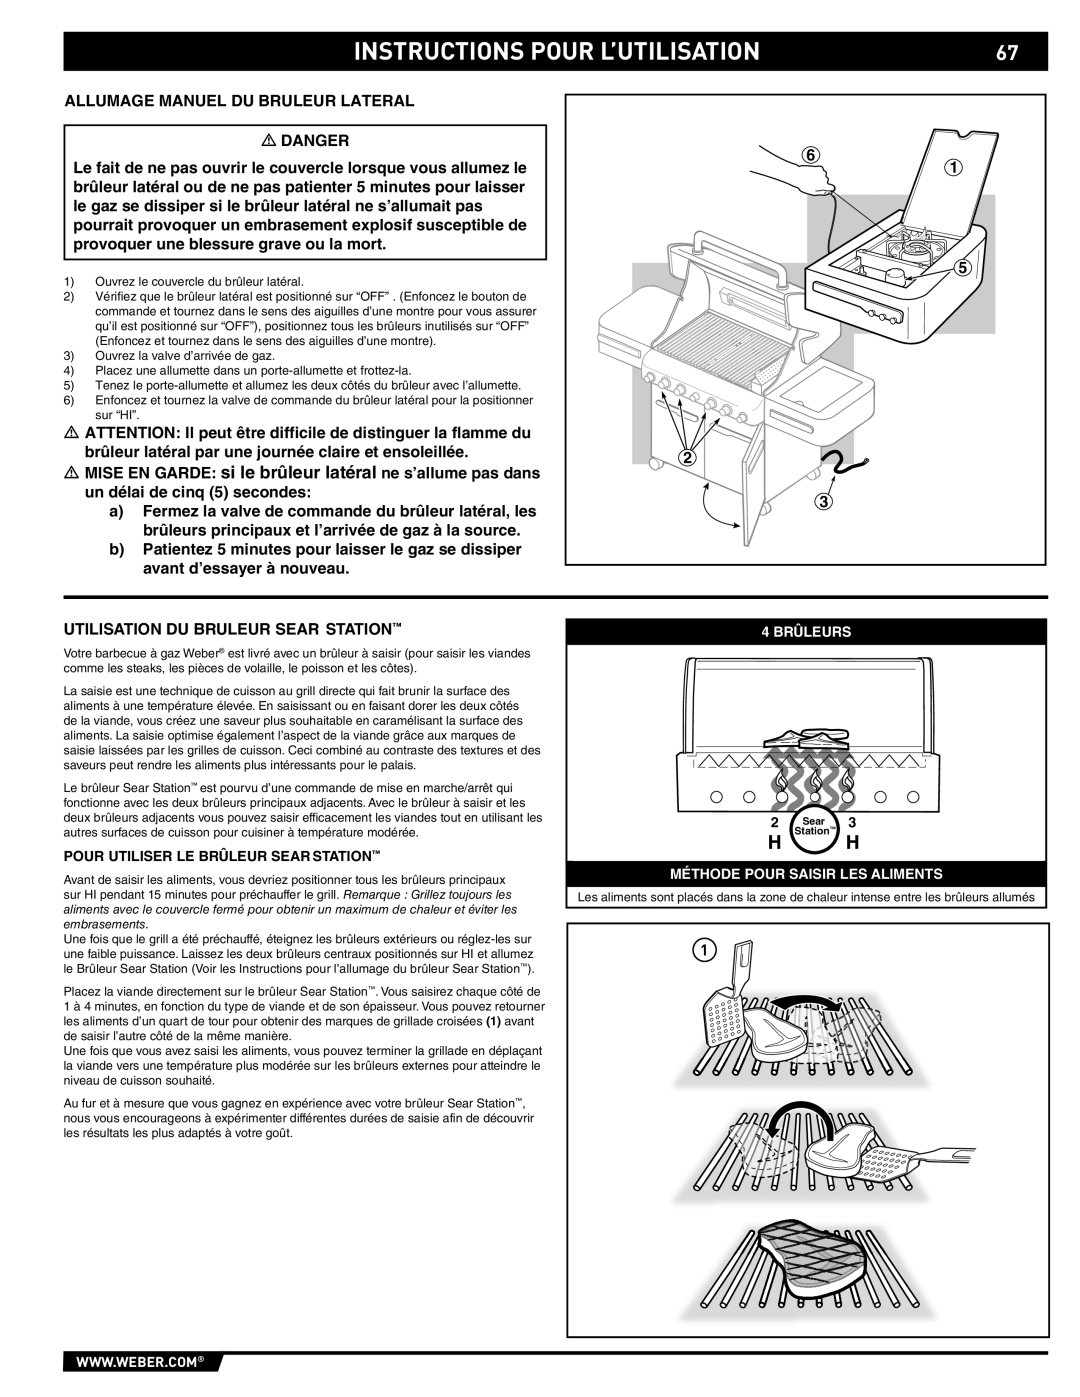 Weber S-470TM manual Instructions Pour L’Utilisation, Allumage Manuel Du Bruleur Lateral Danger 